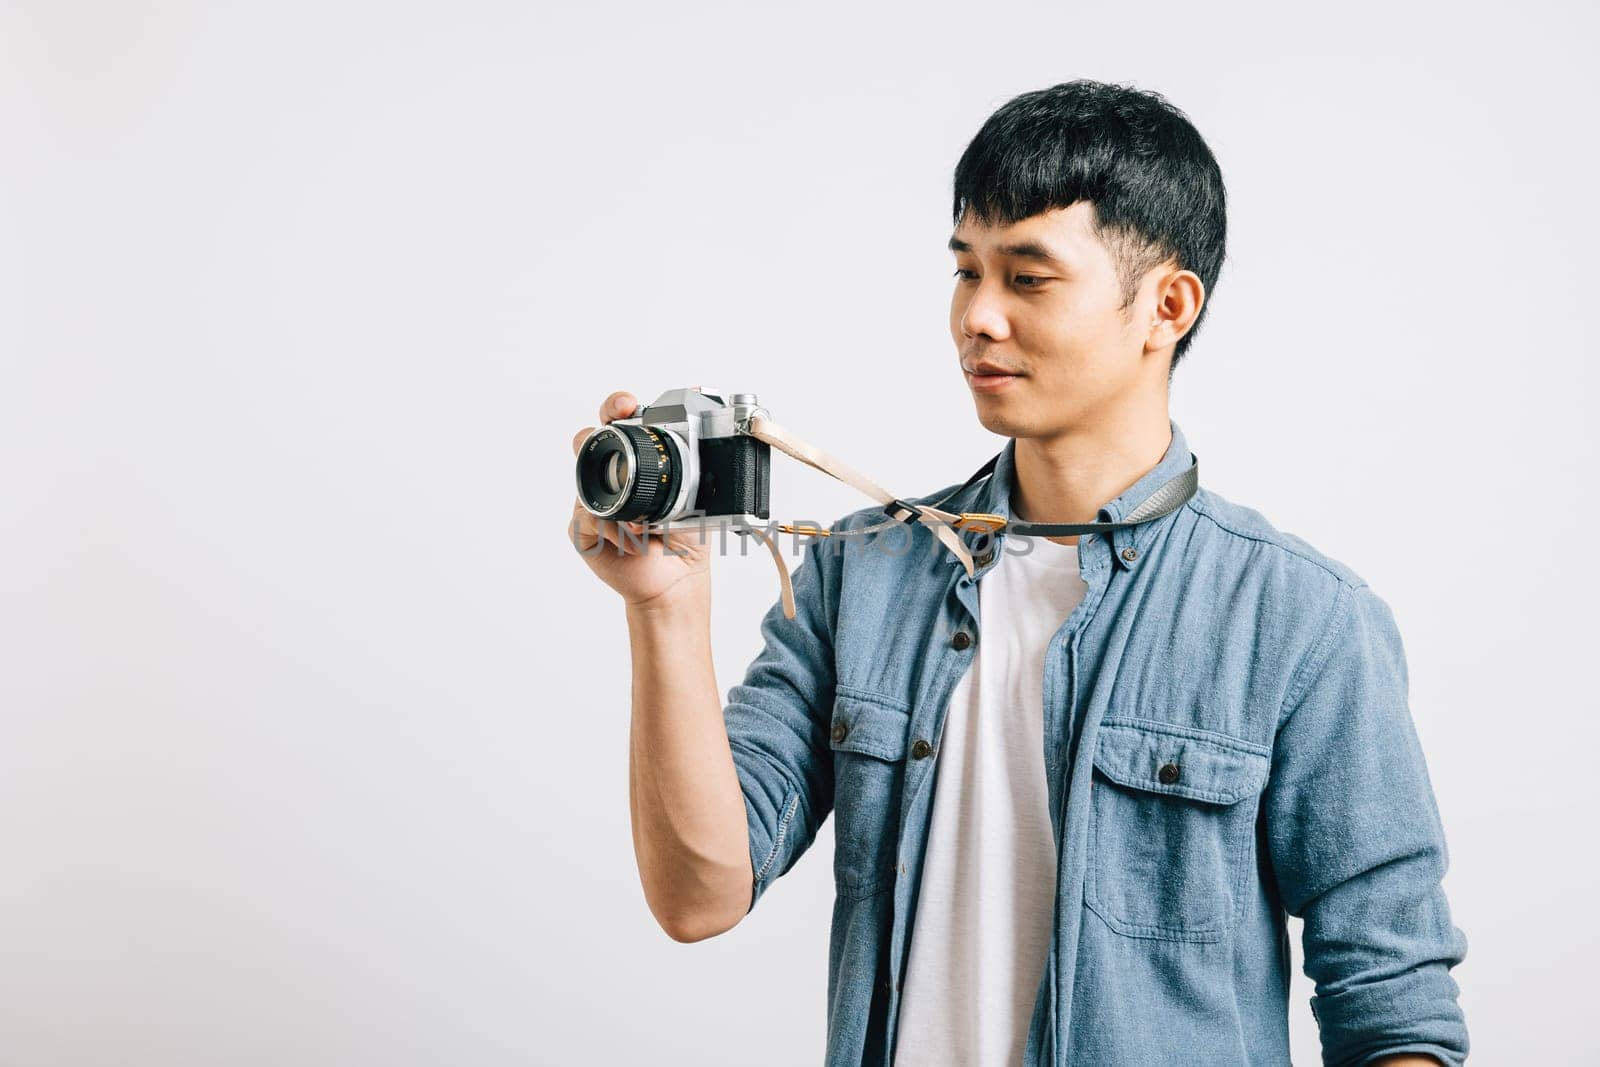 A vintage camera clicks as a young man smiles for a photographer by Sorapop